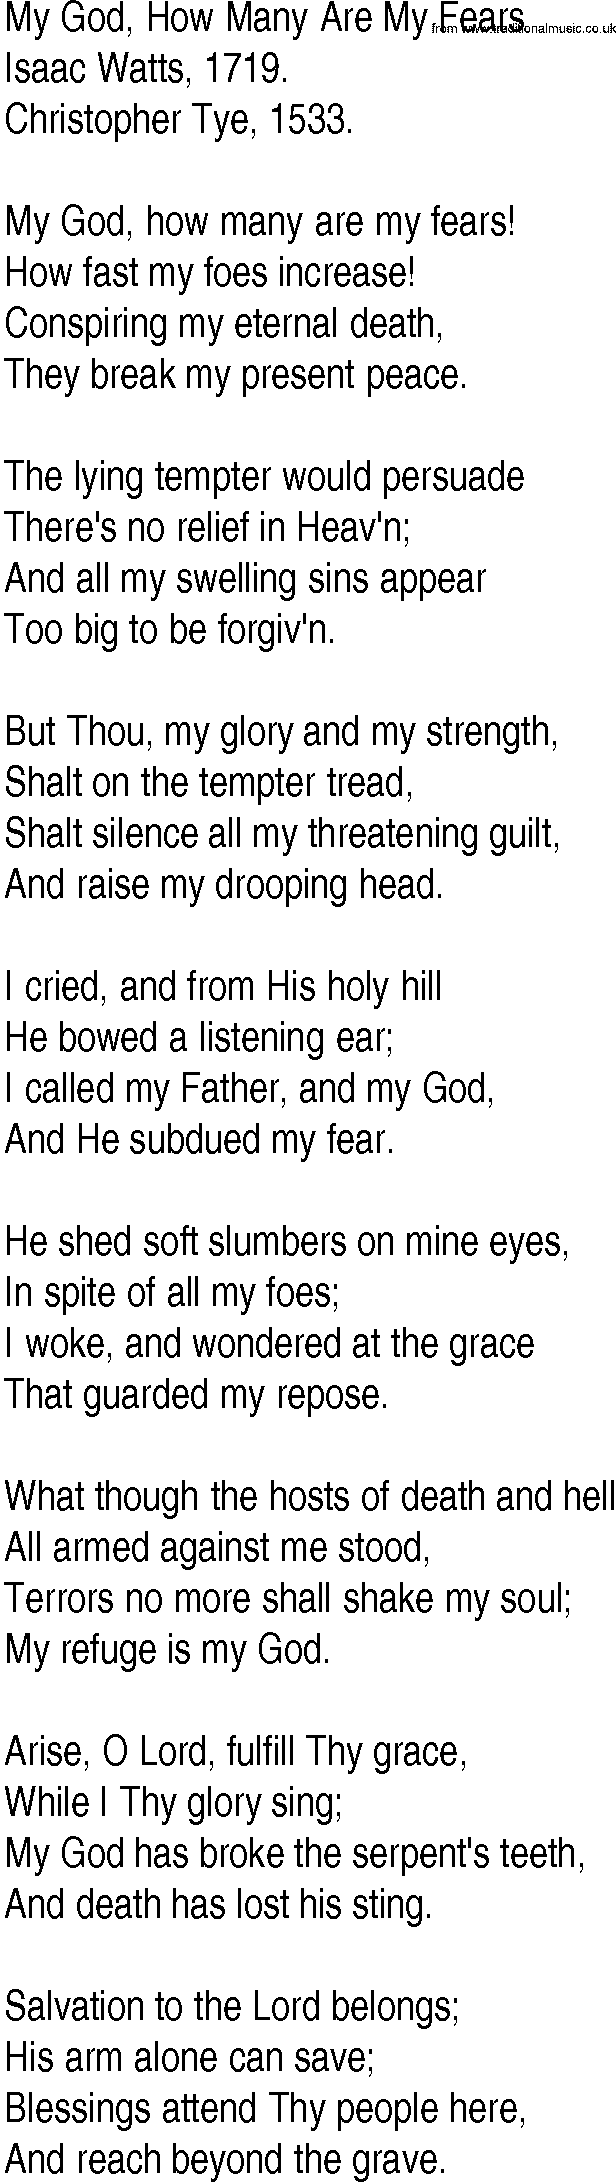 Hymn and Gospel Song: My God, How Many Are My Fears by Isaac Watts lyrics